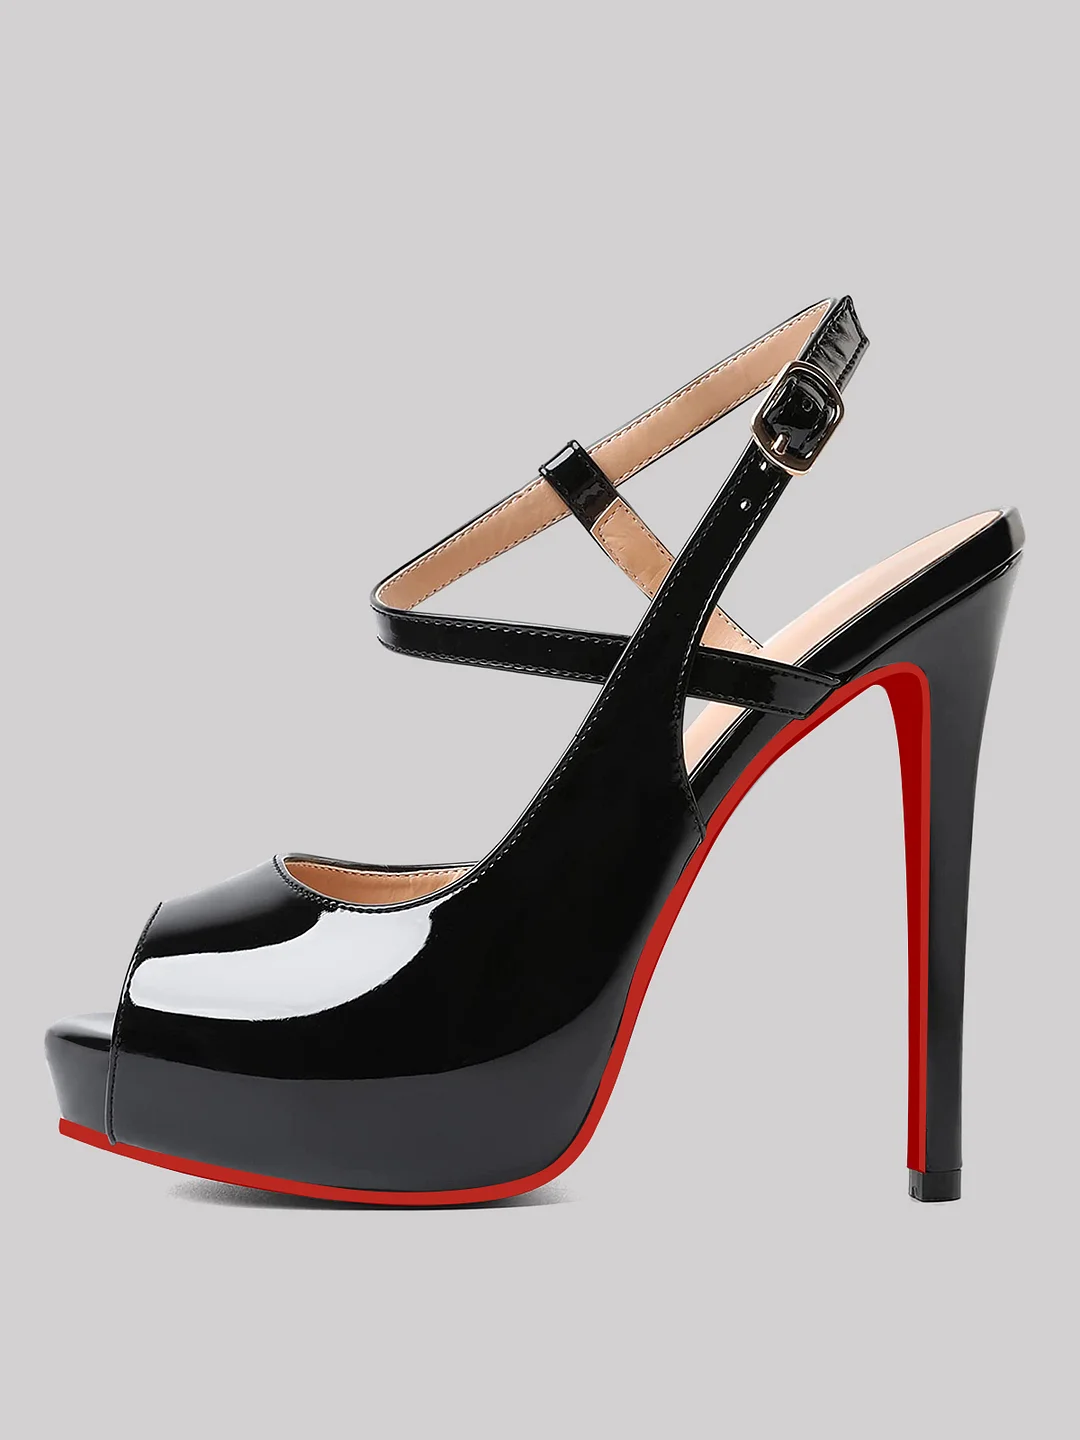 120mm Women's Stiletto High Heels Open Toe Sandals Red Bottom Platform So Jenlove Patent Shoes